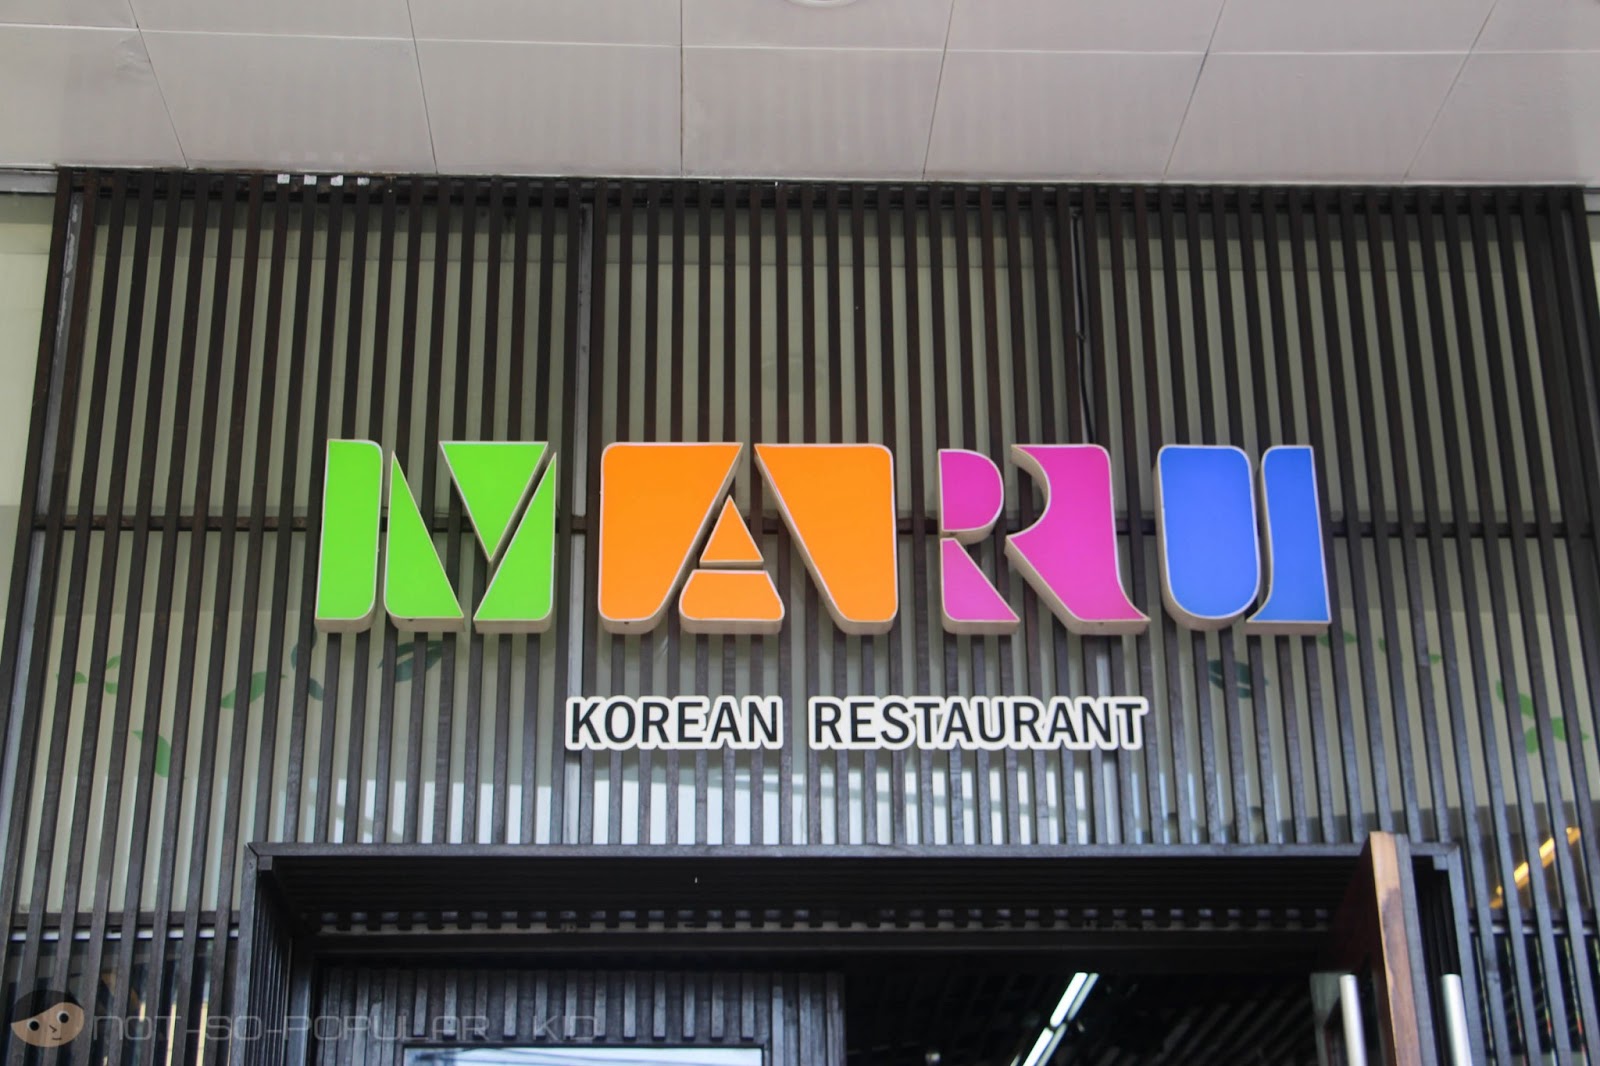 Maru - Korean Restaurant in Robinsons Place Manila - A Not-So-Popular